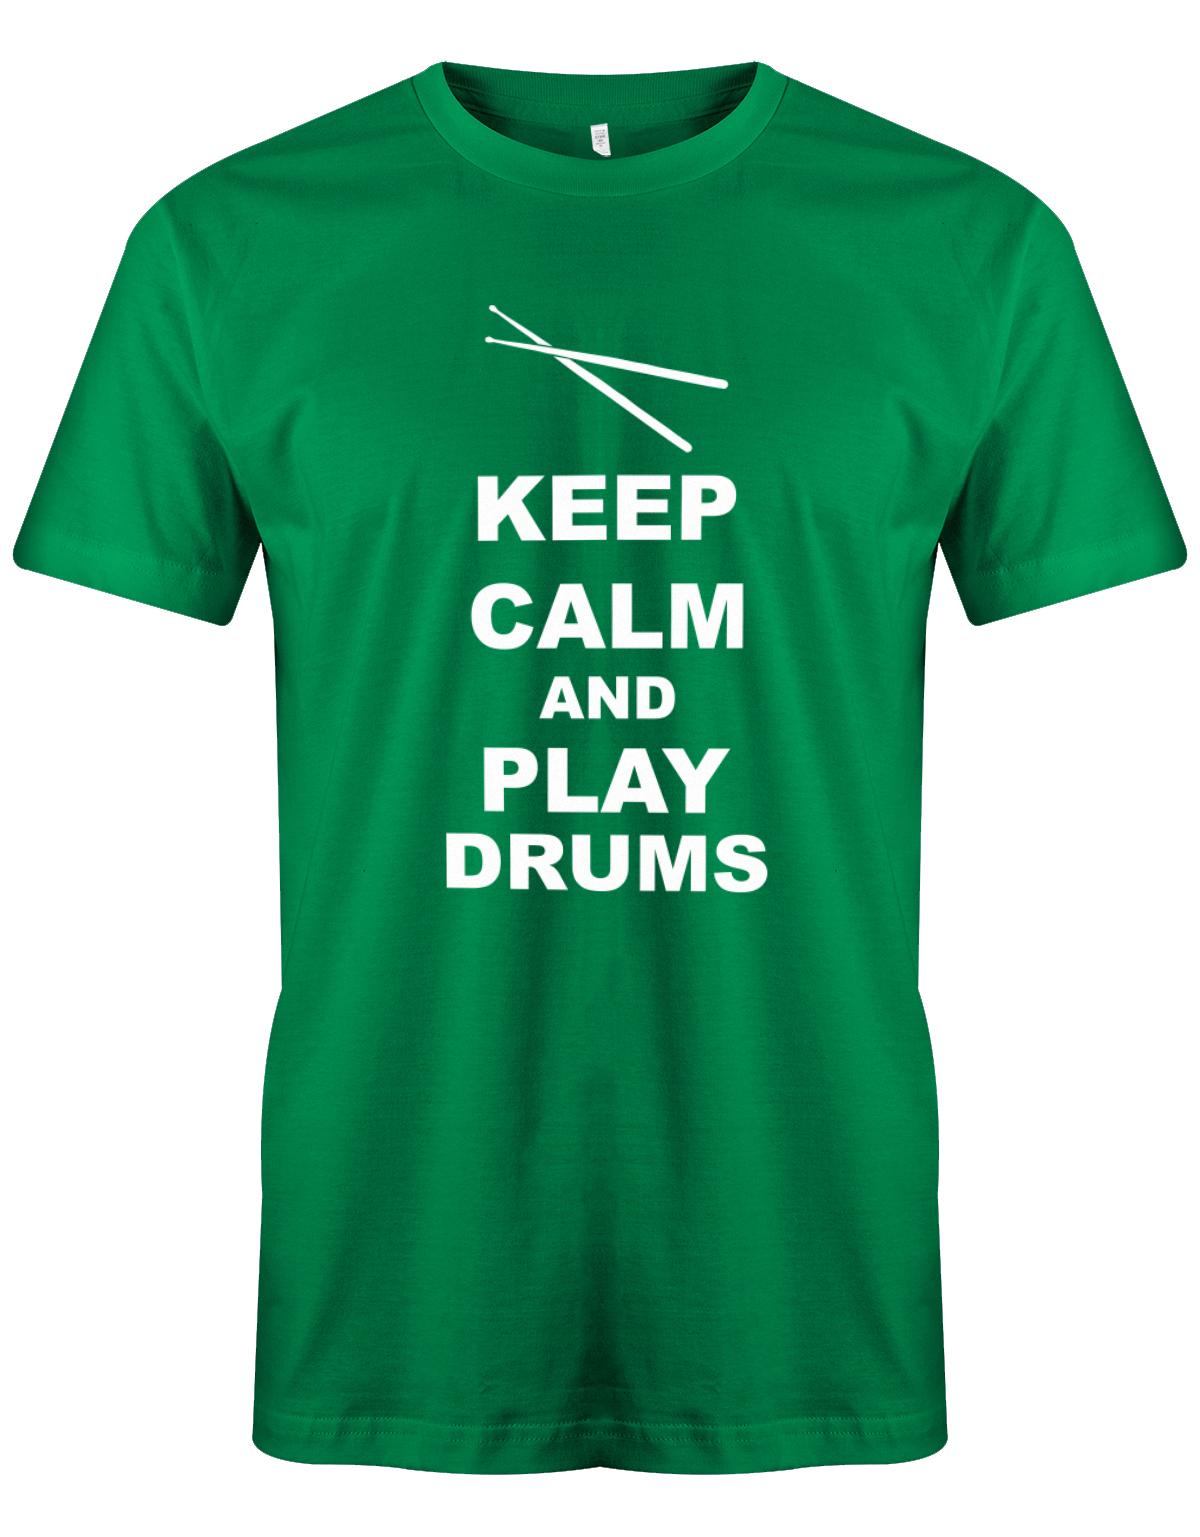 Keep-Calm-and-play-Drums-Herren-Shirt-Gr-n